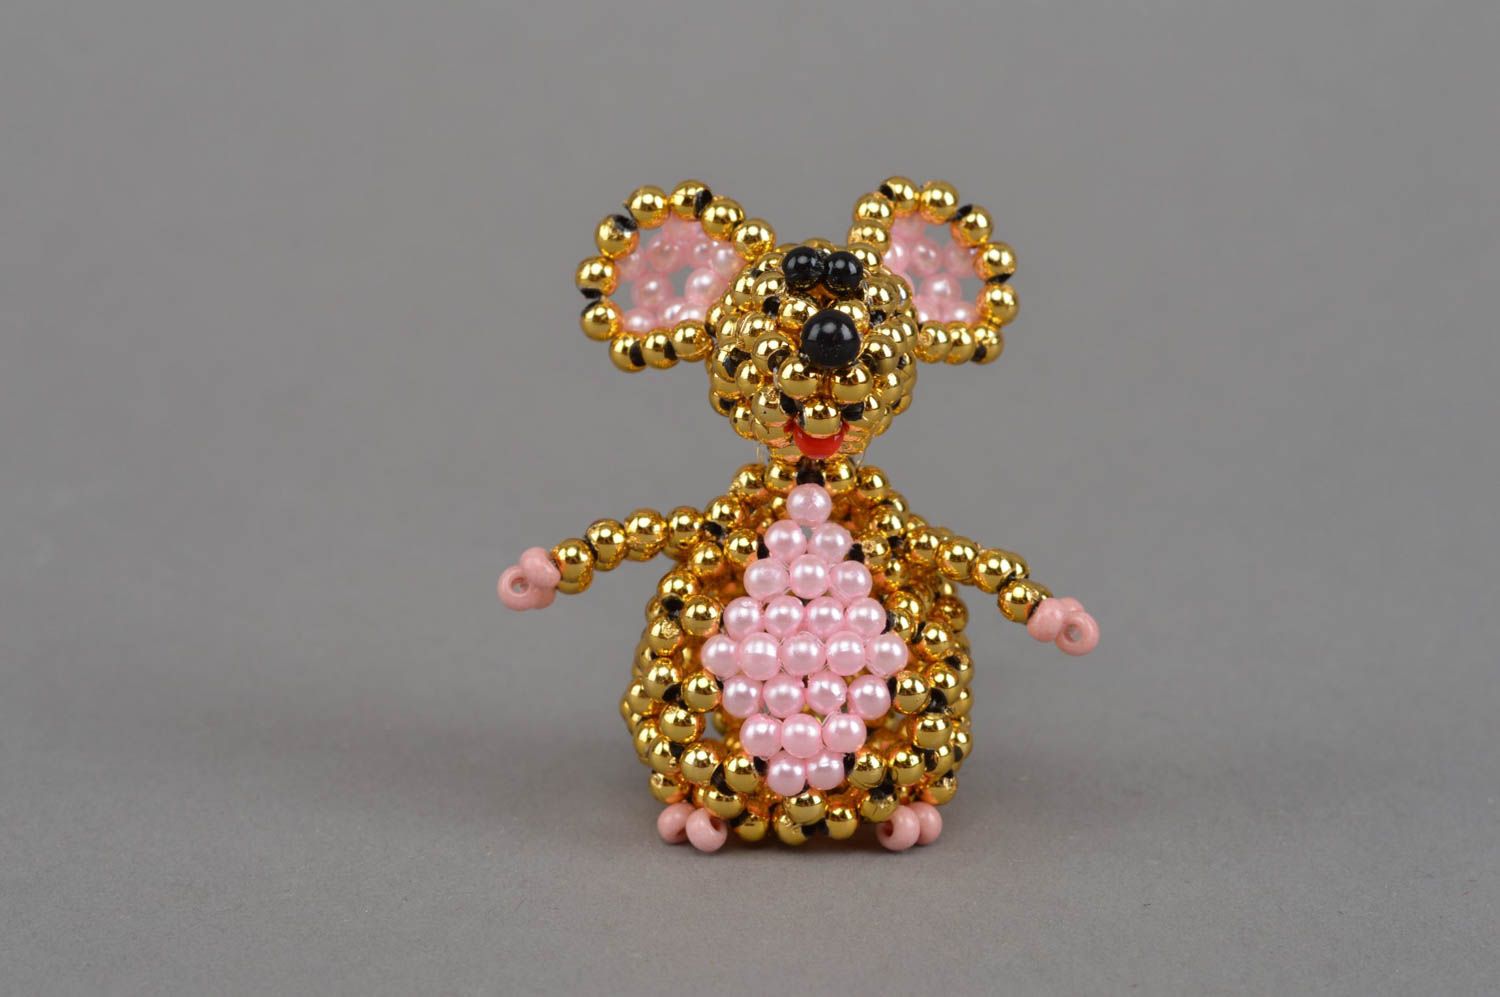 Handmade miniature collectible bead woven animal figurine of golden mouse photo 3